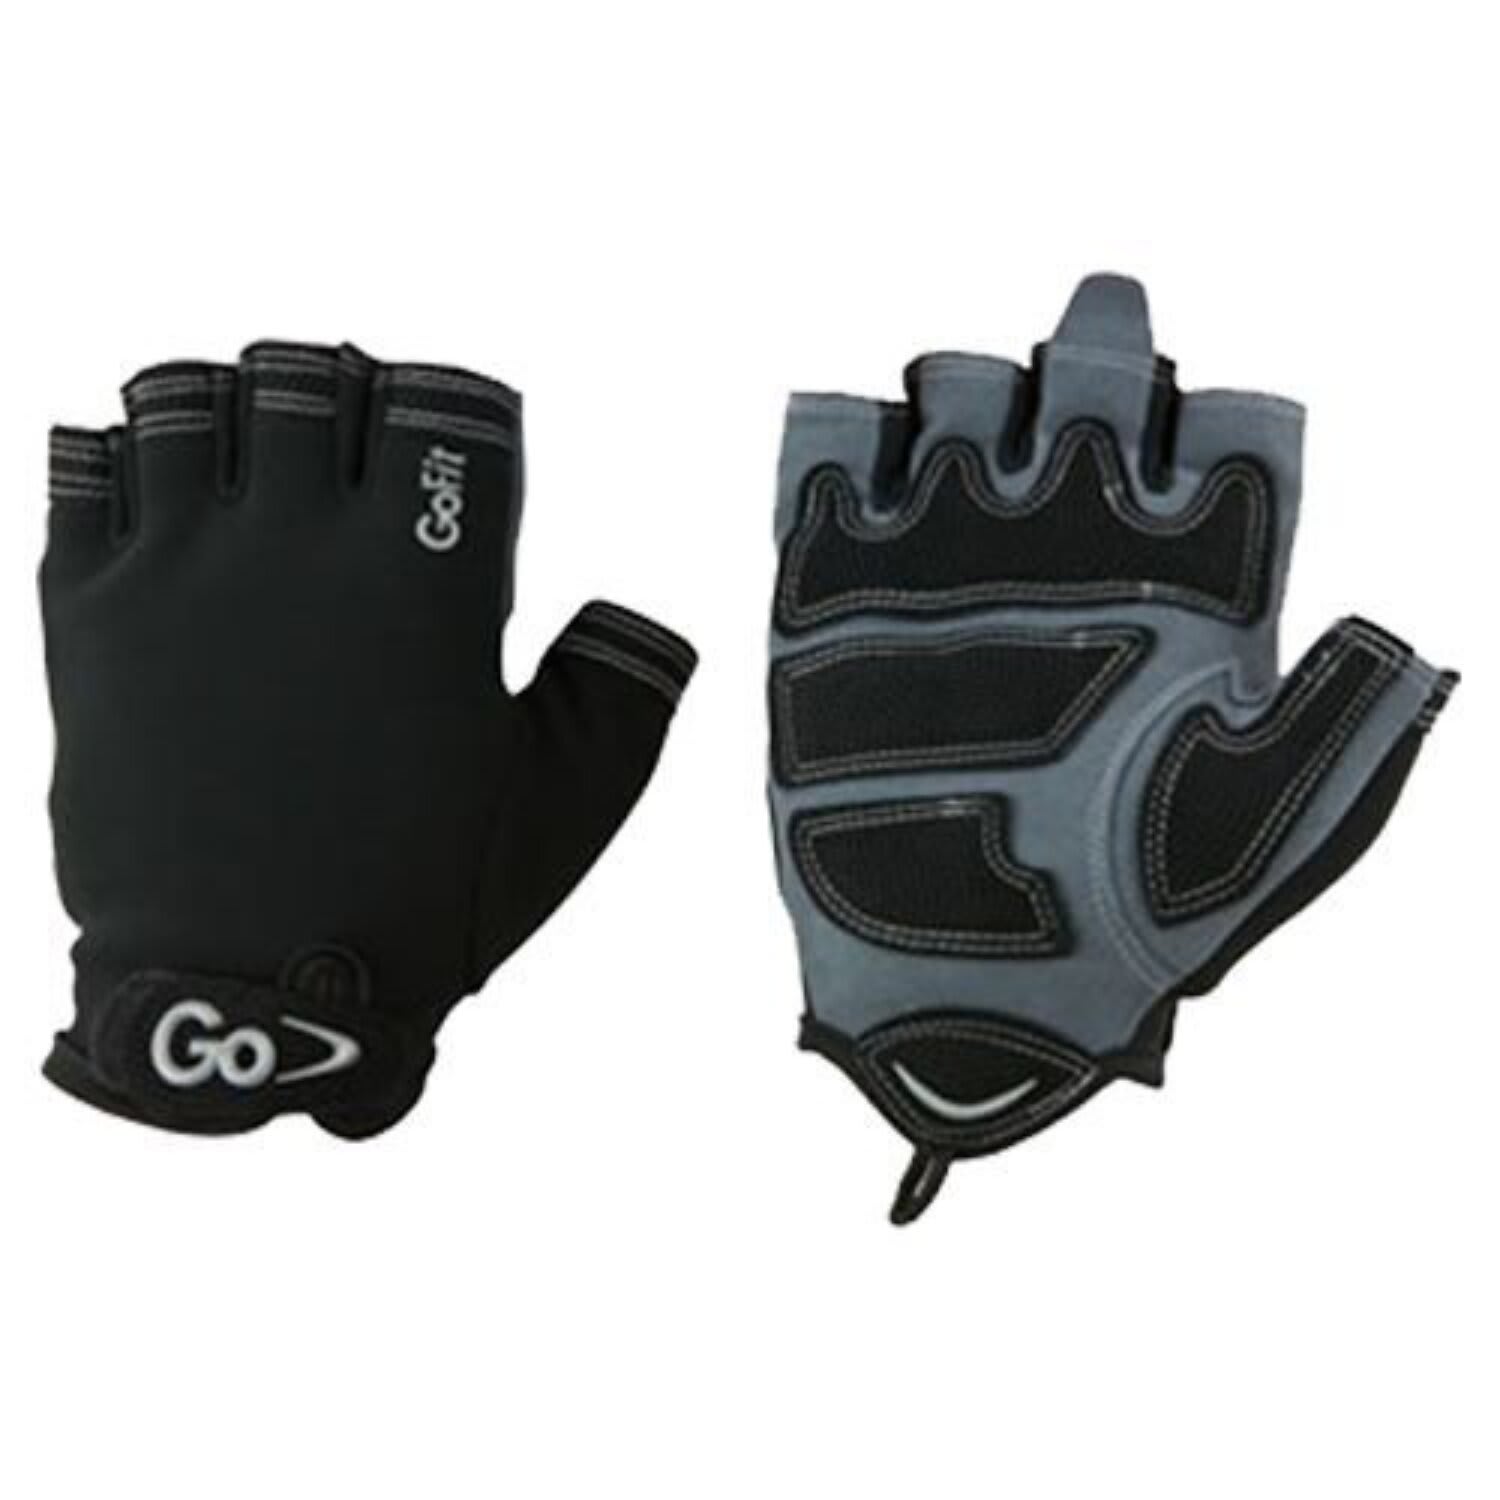 GoFit Cross Training Gloves | Sportsmans Warehouse